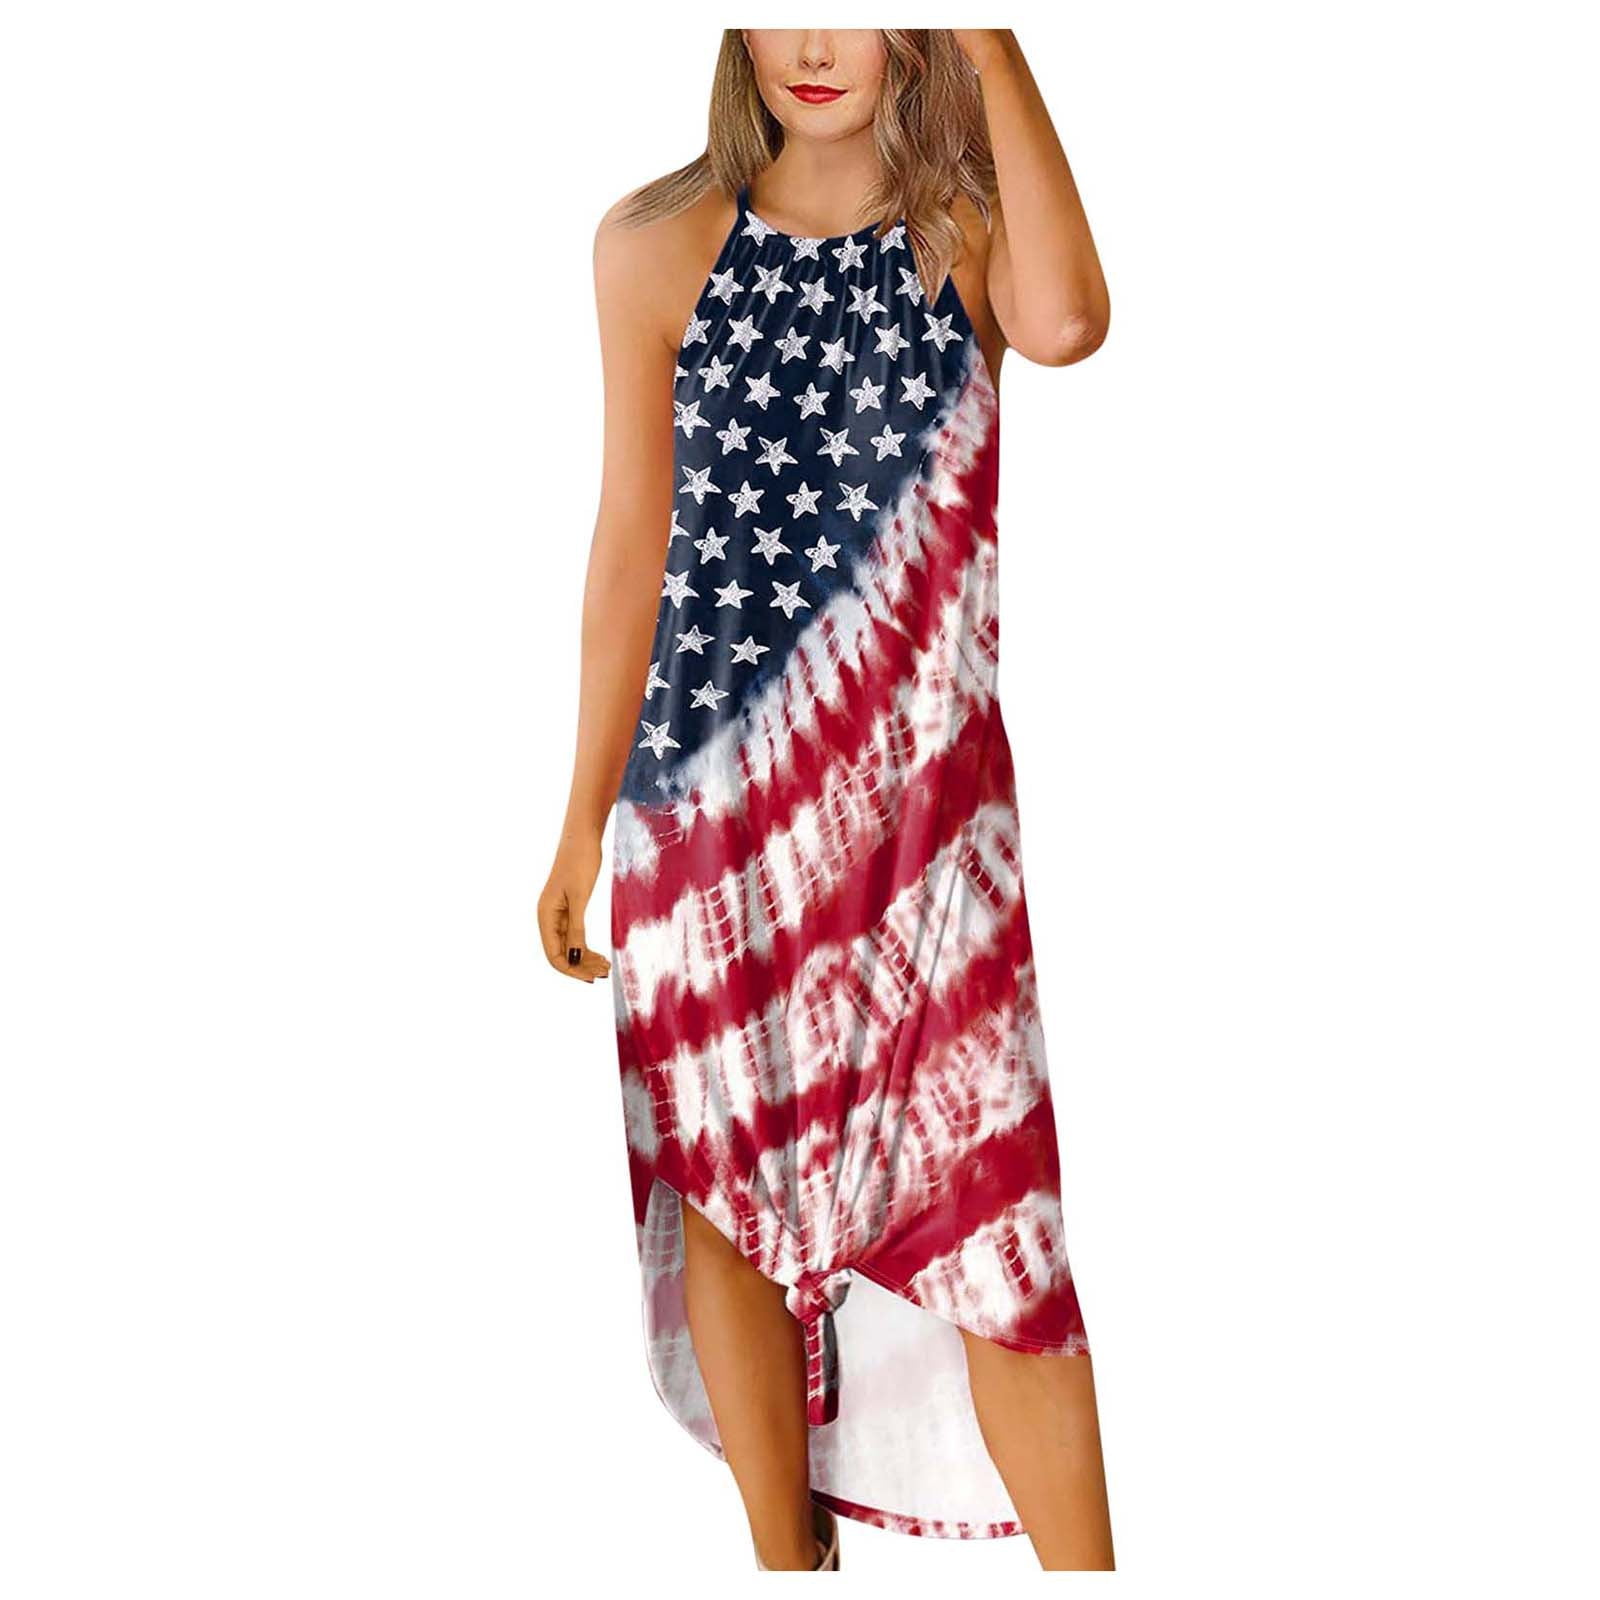 NLOMOCT Womens Summer Short Sleeve American Flag Dresses Stripe Gradient Mini Dresses Casual Beach Party Dresses Sundress